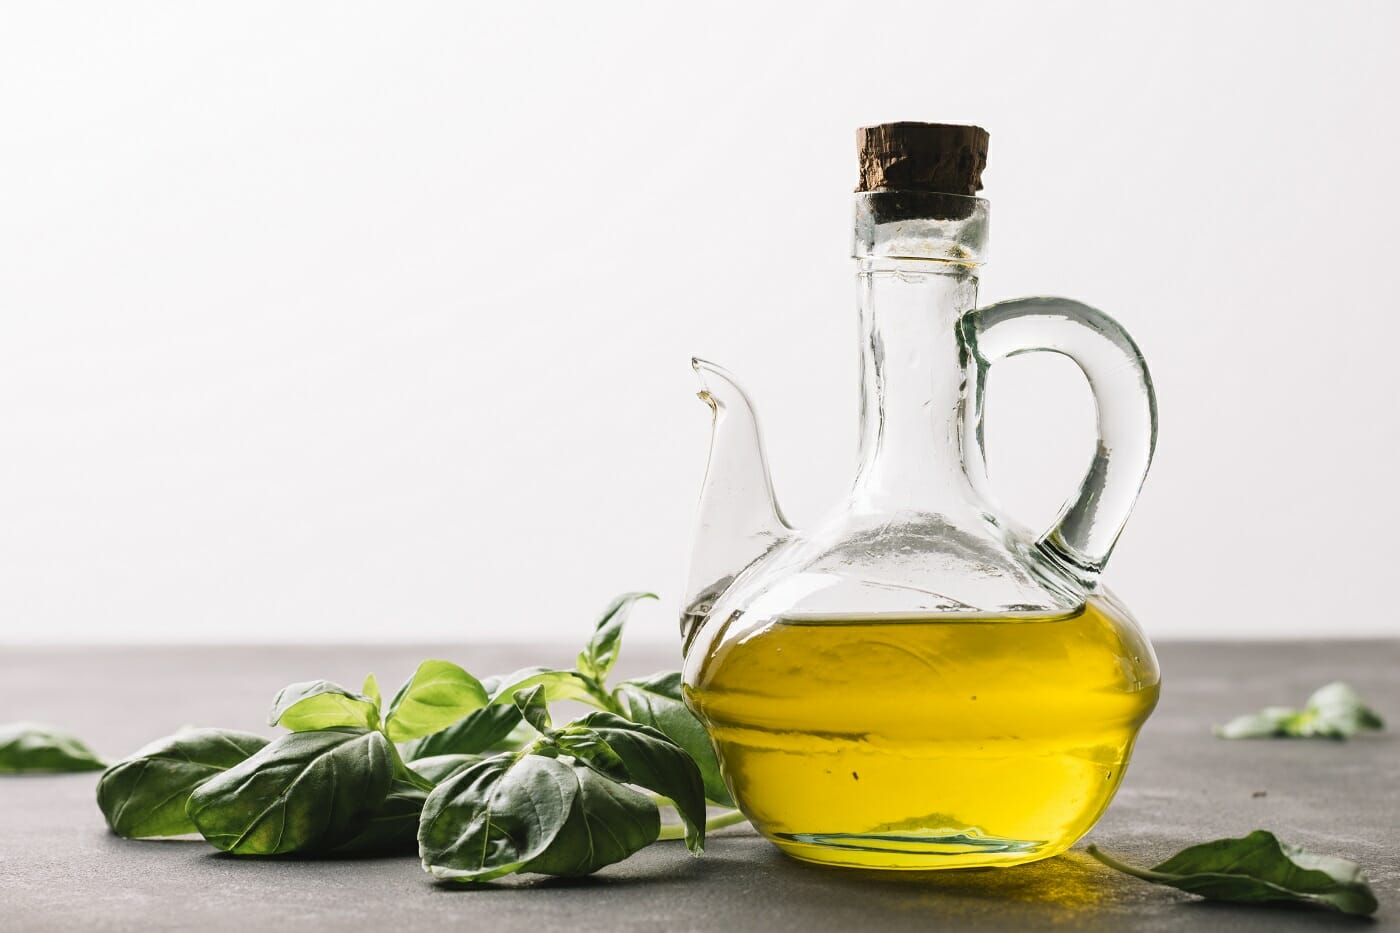 A bottle of olive oil. Бутылка оливкового масла. Бутылка для оливкового масла с носиком. Пластиковые бутылки для оливкового масла зеленые. Маленькие бутылочки с оливковым маслом.